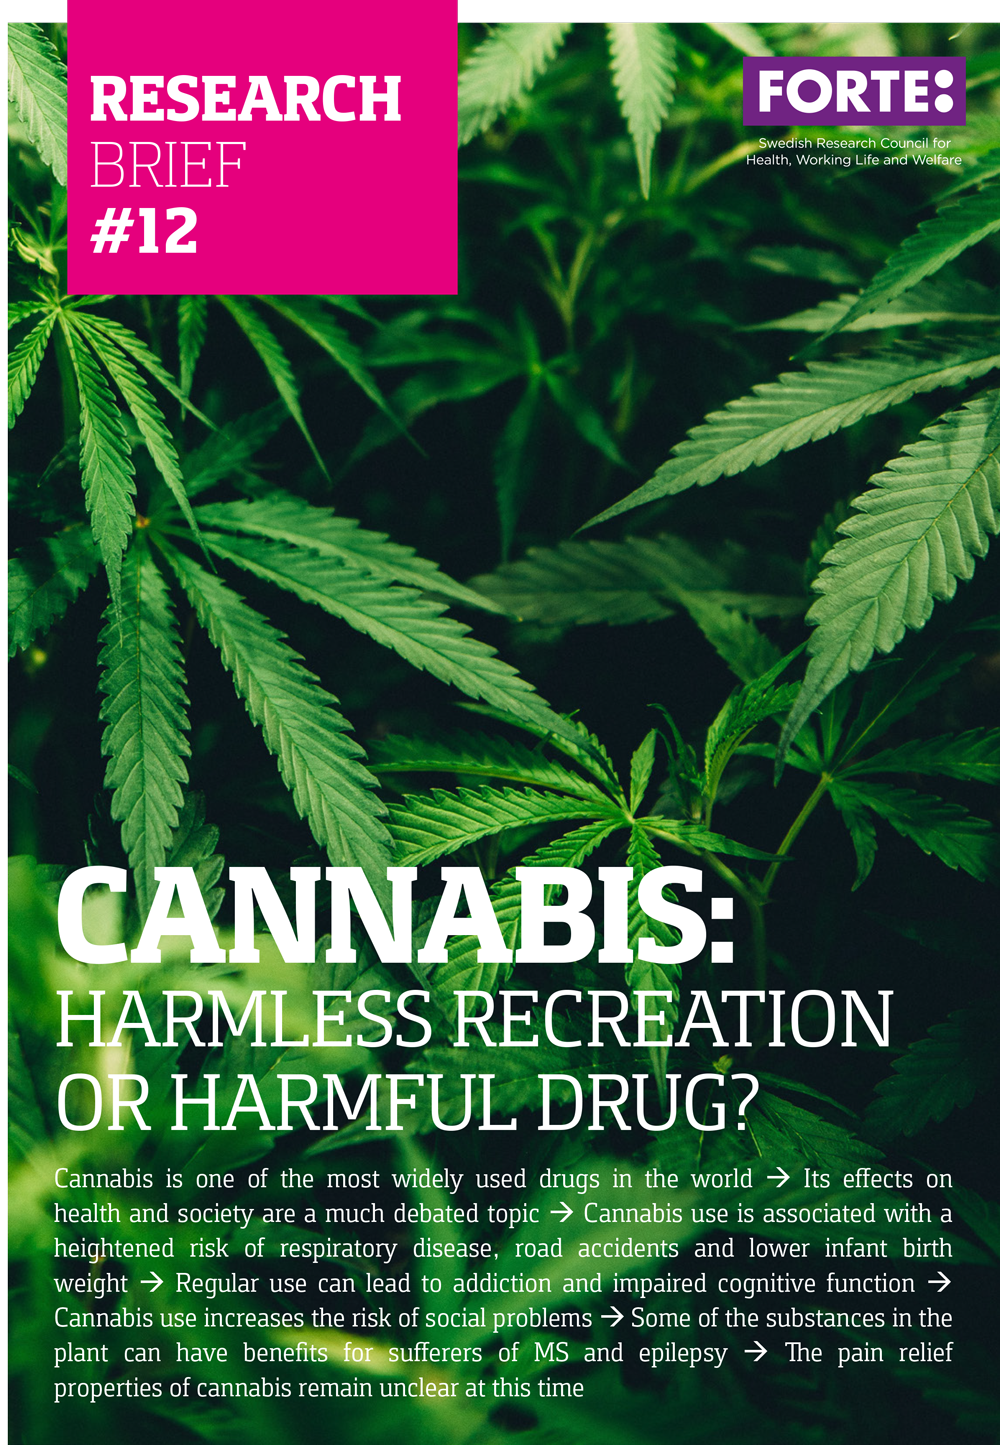 Research brief: Cannabis – harmless recreation or harmful drug?